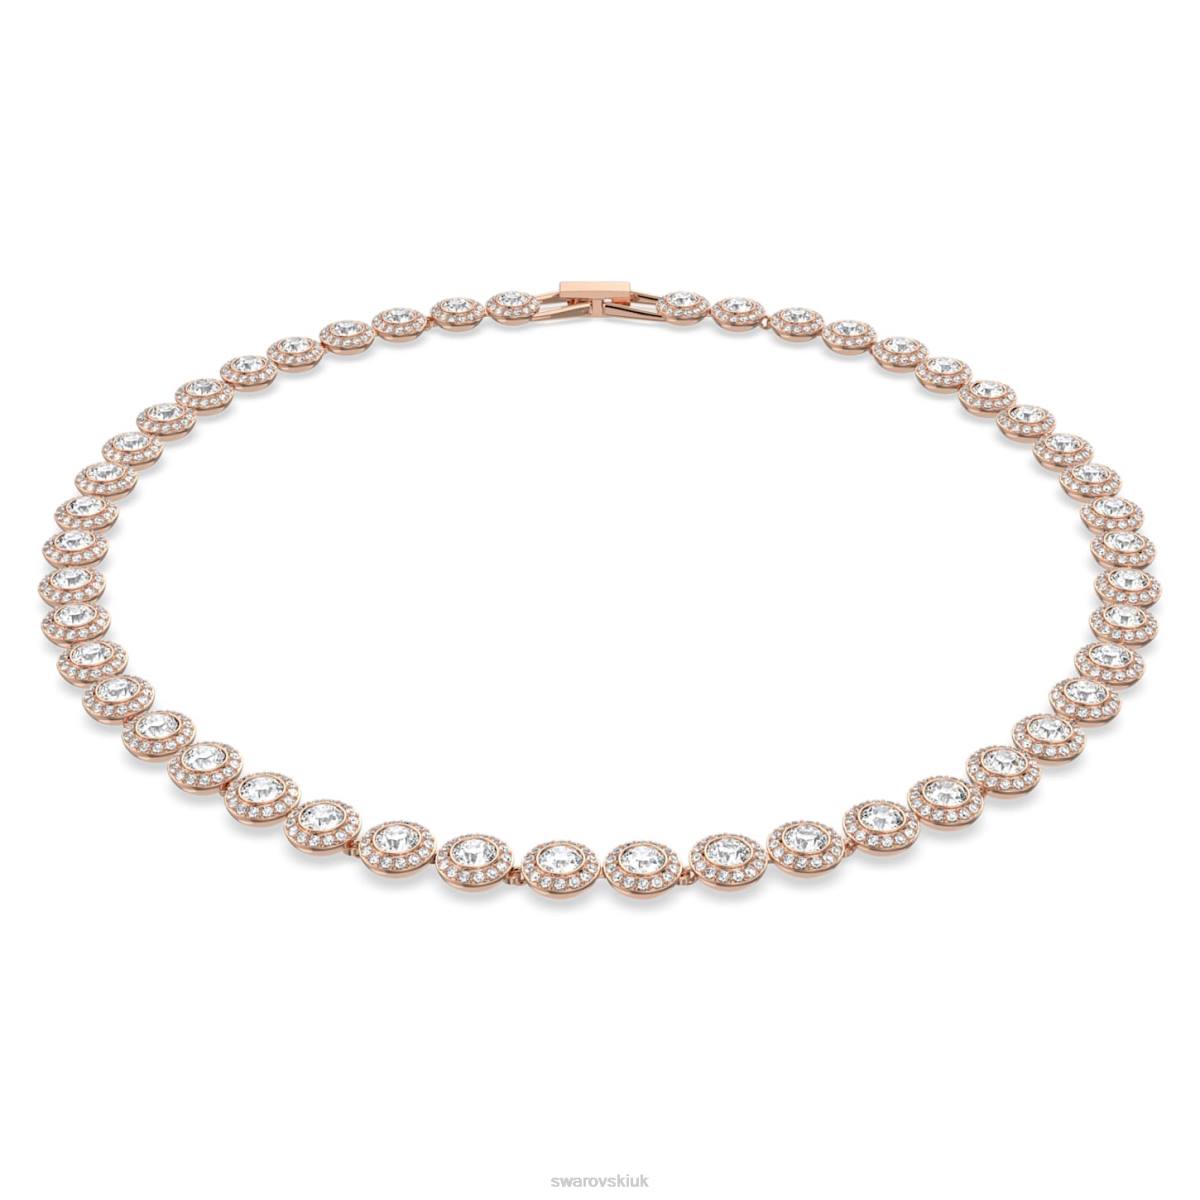 Jewelry Swarovski Angelic necklace Round cut, White, Rose gold-tone plated 48JX10